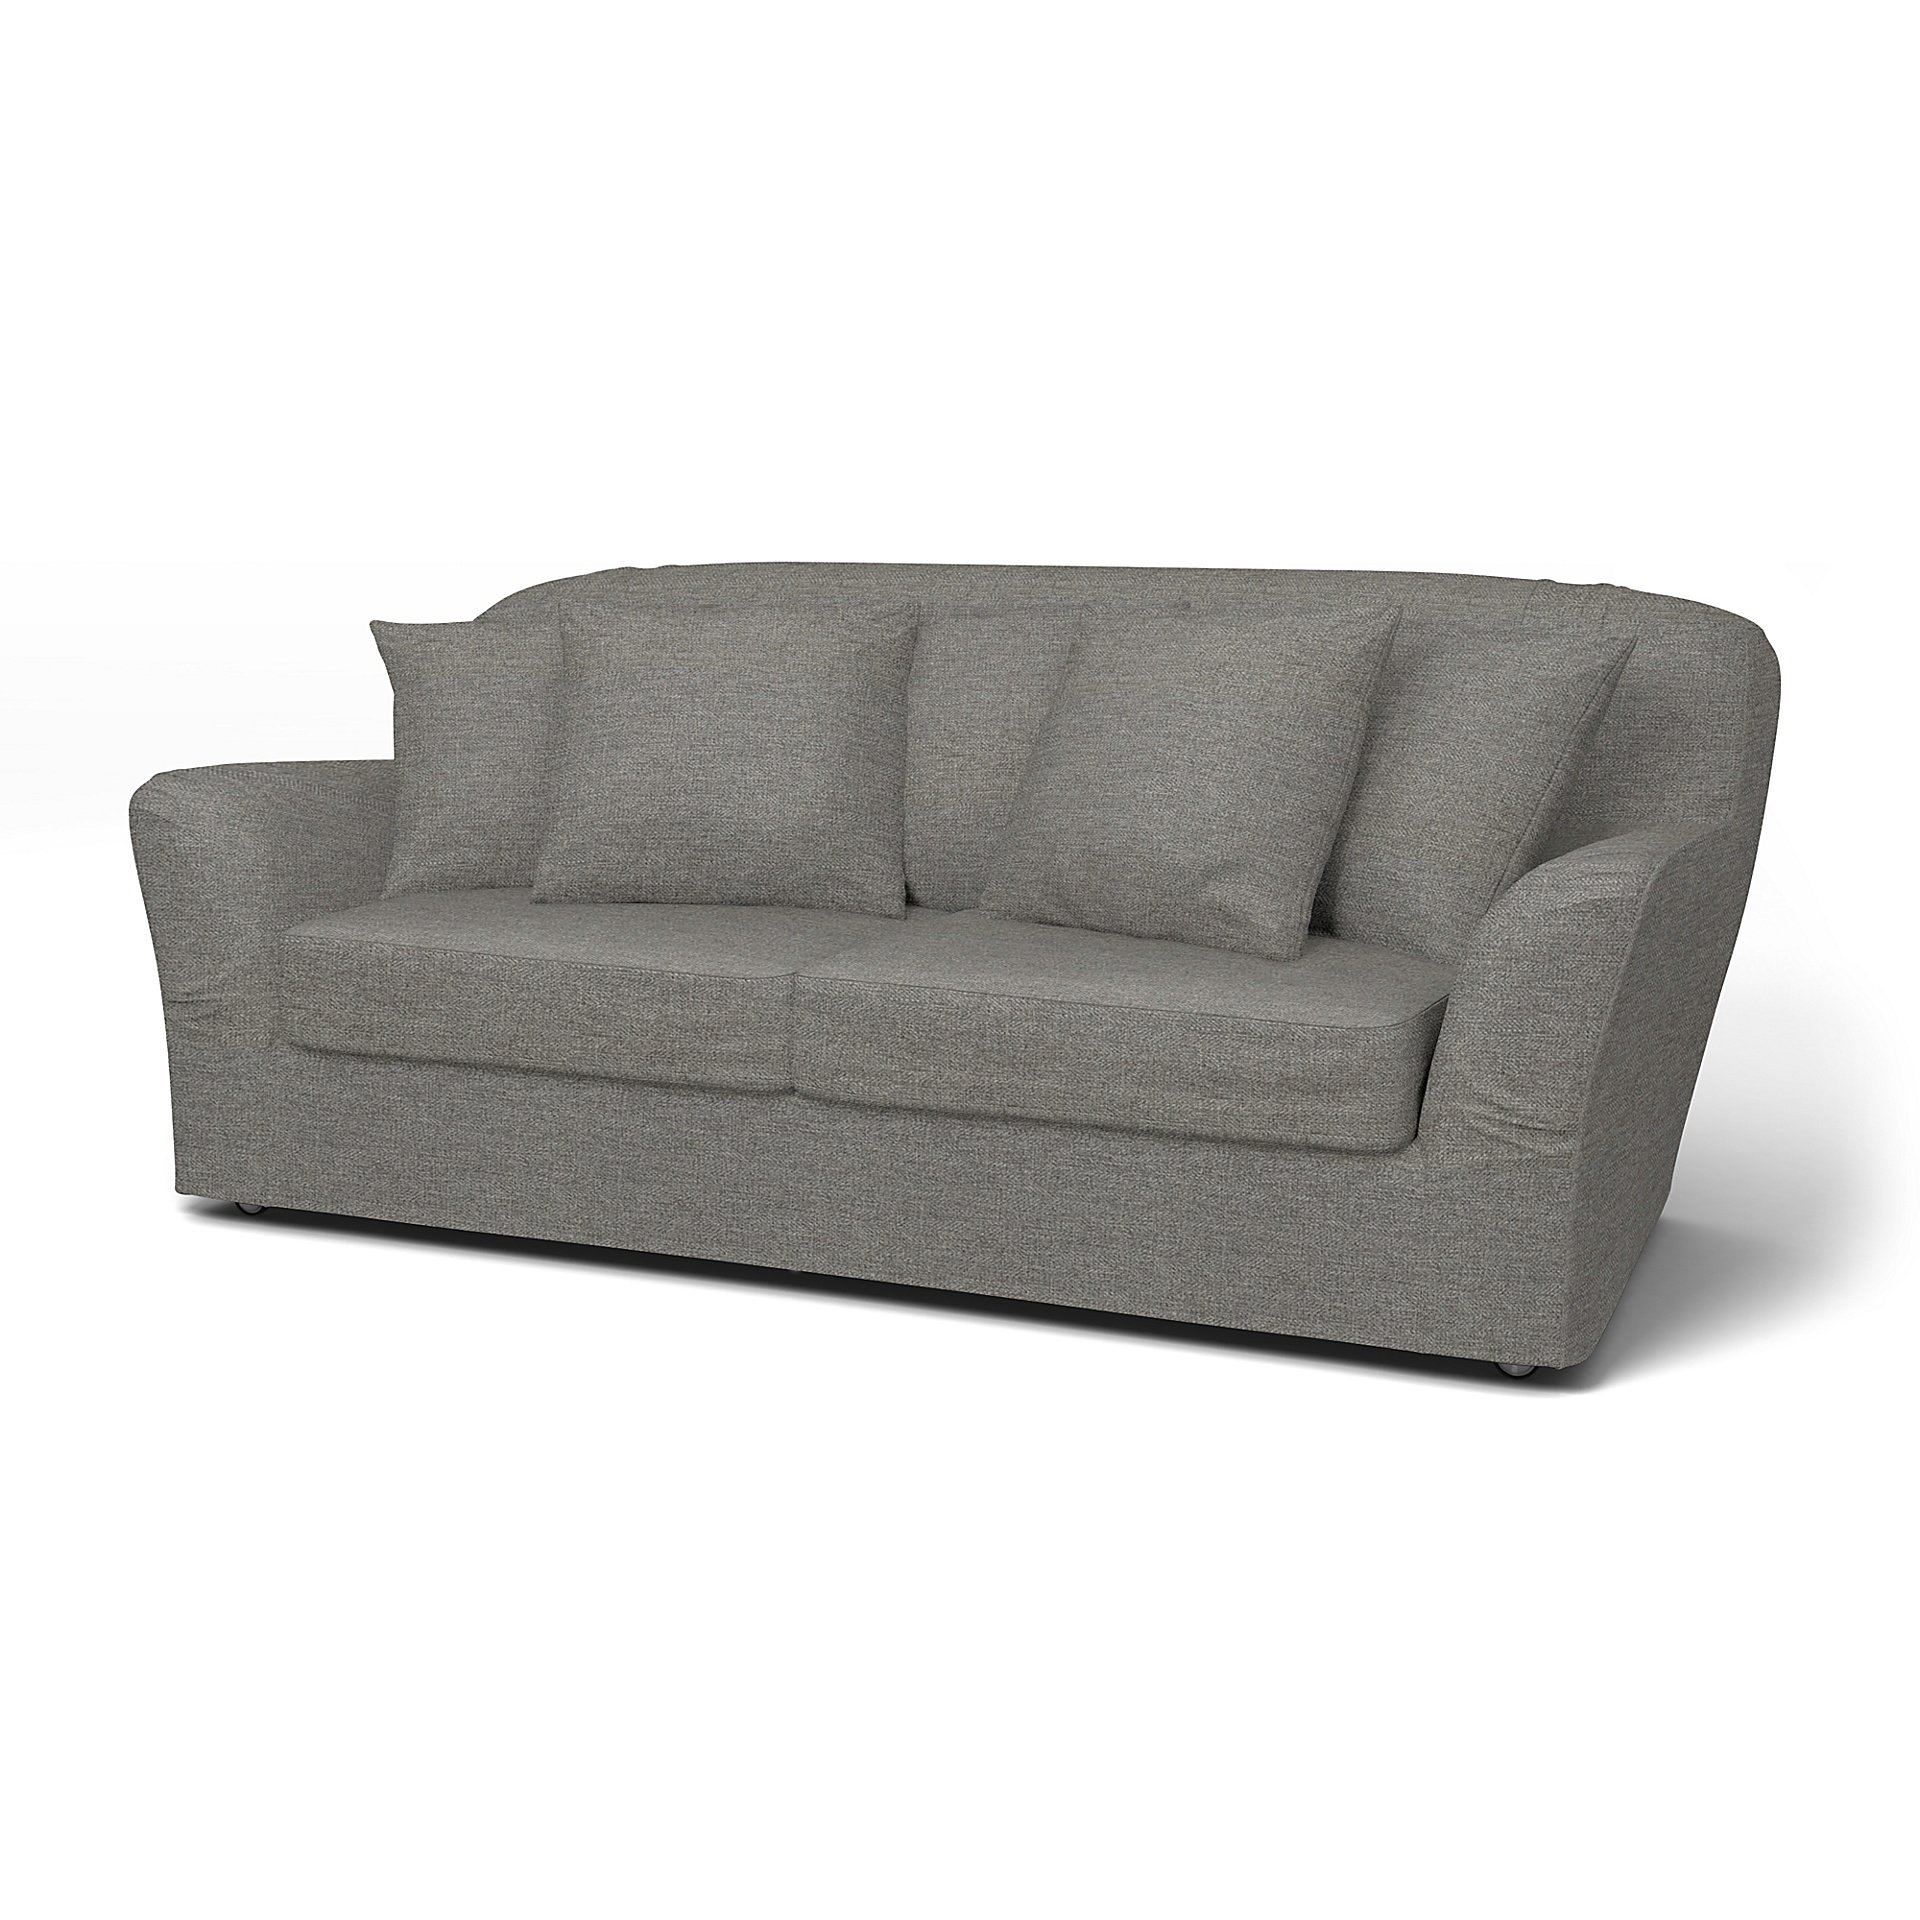 IKEA - Tomelilla sofa bed (Standard model), Taupe, Boucle & Texture - Bemz